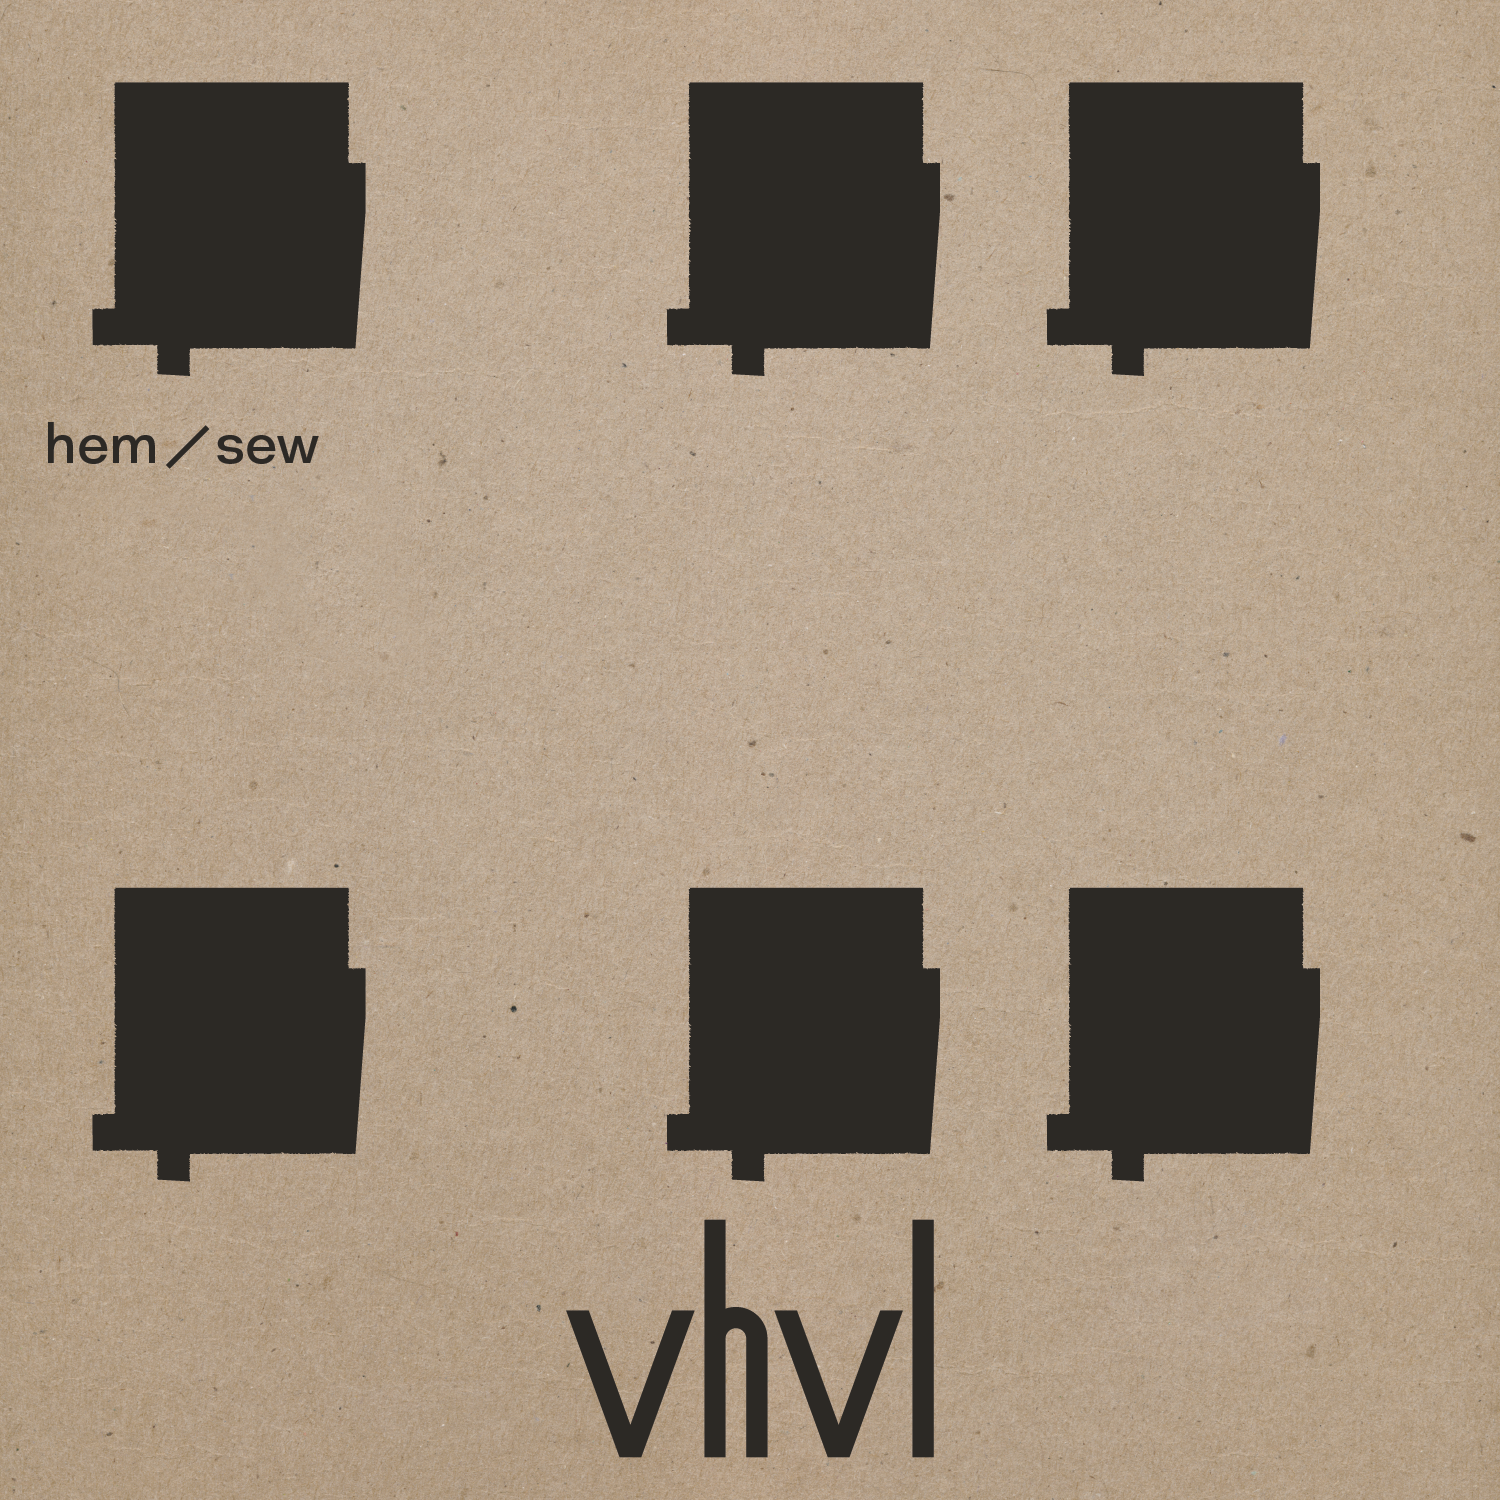 Image for vhvl – hem/sew